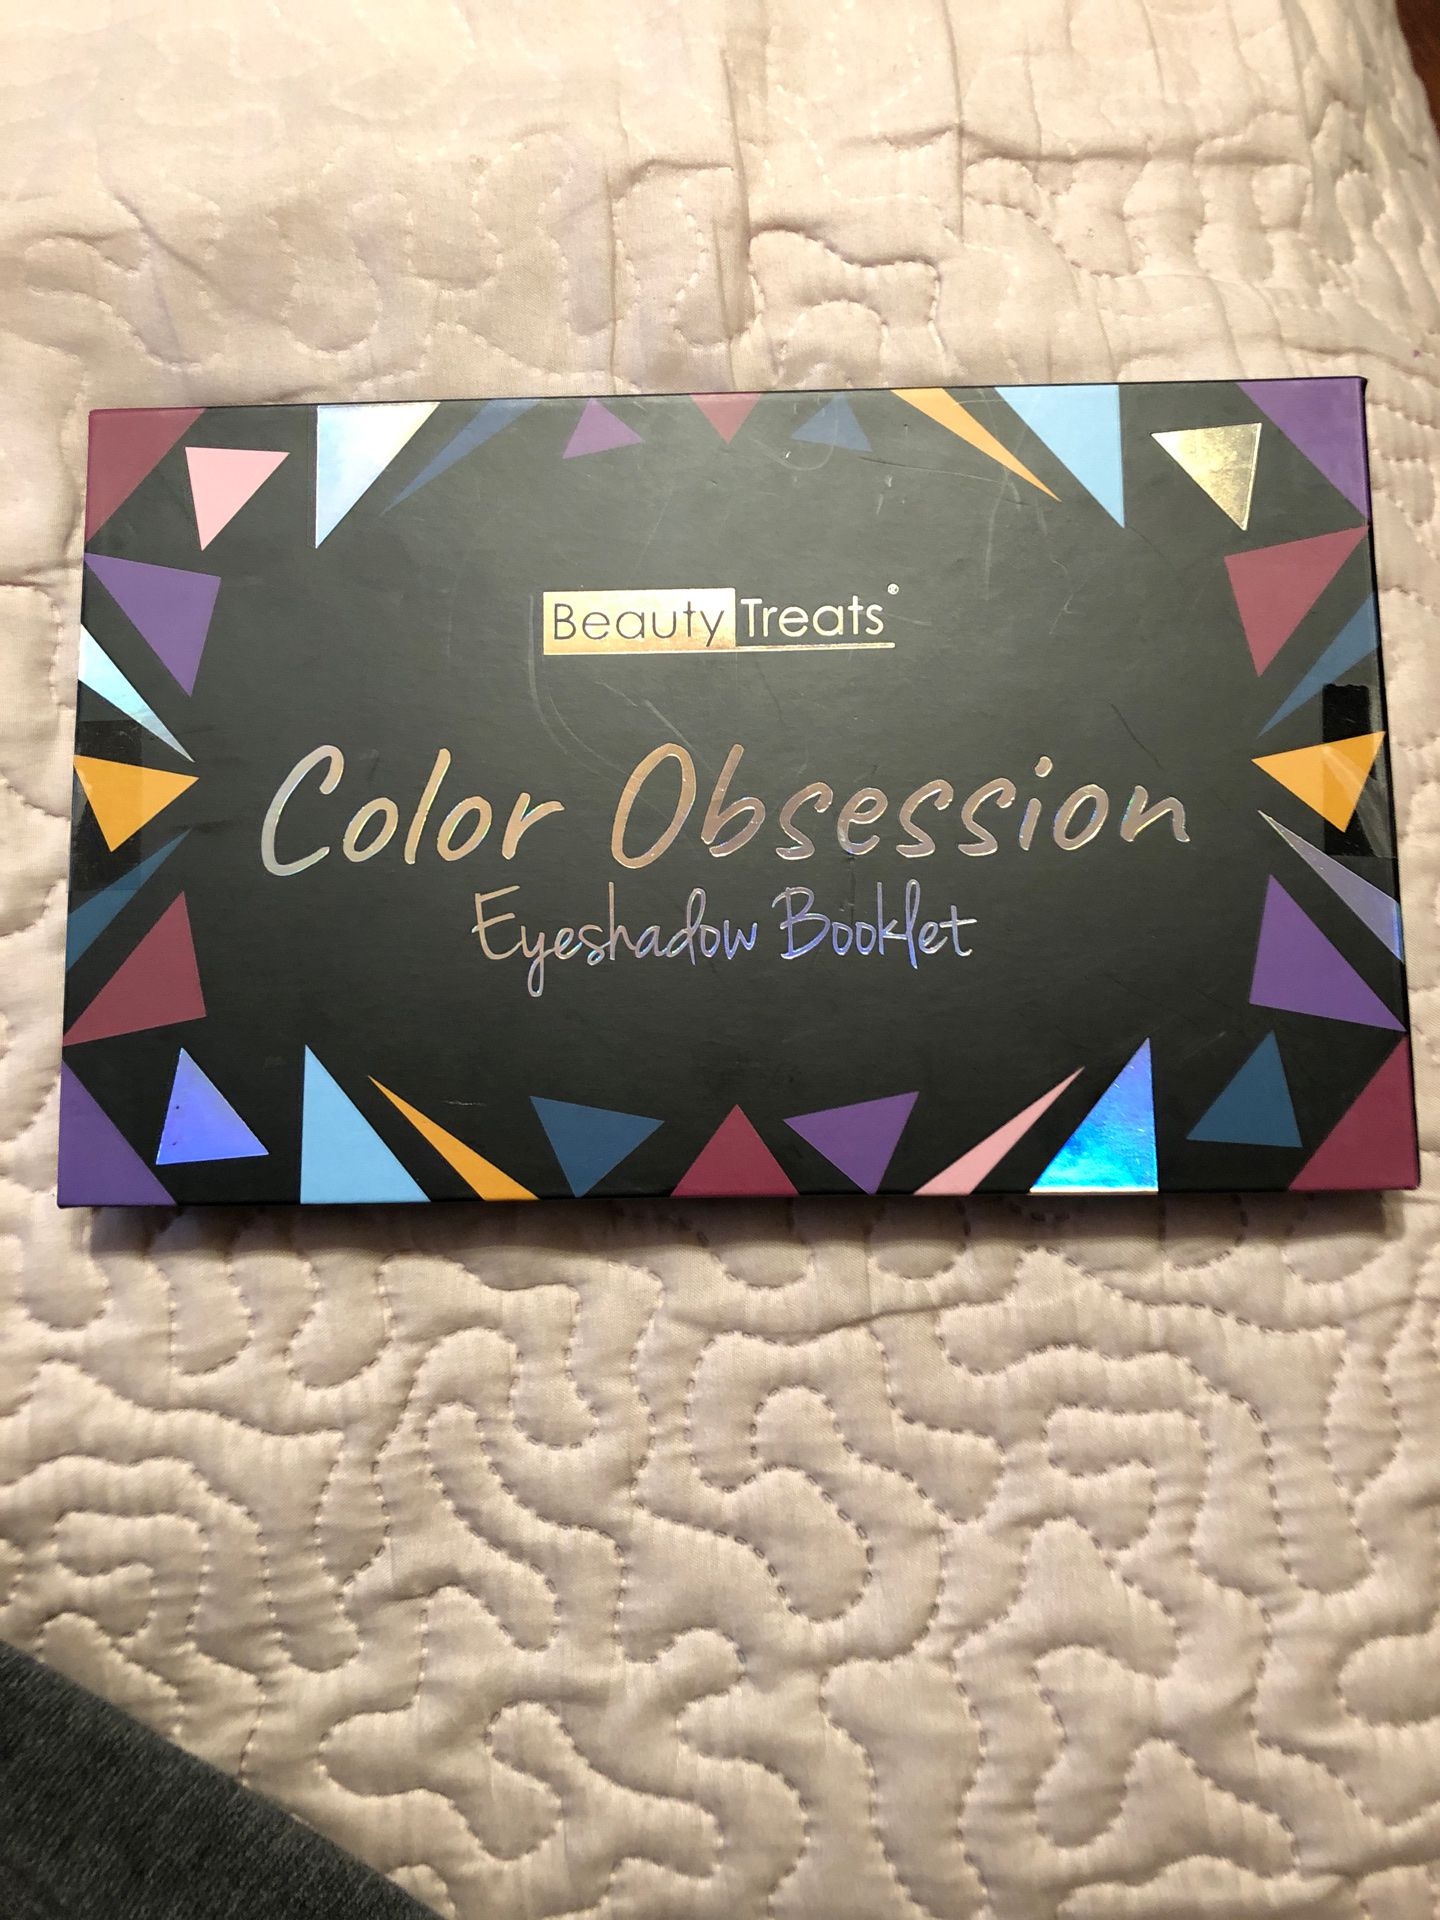 Color Obsession Palette